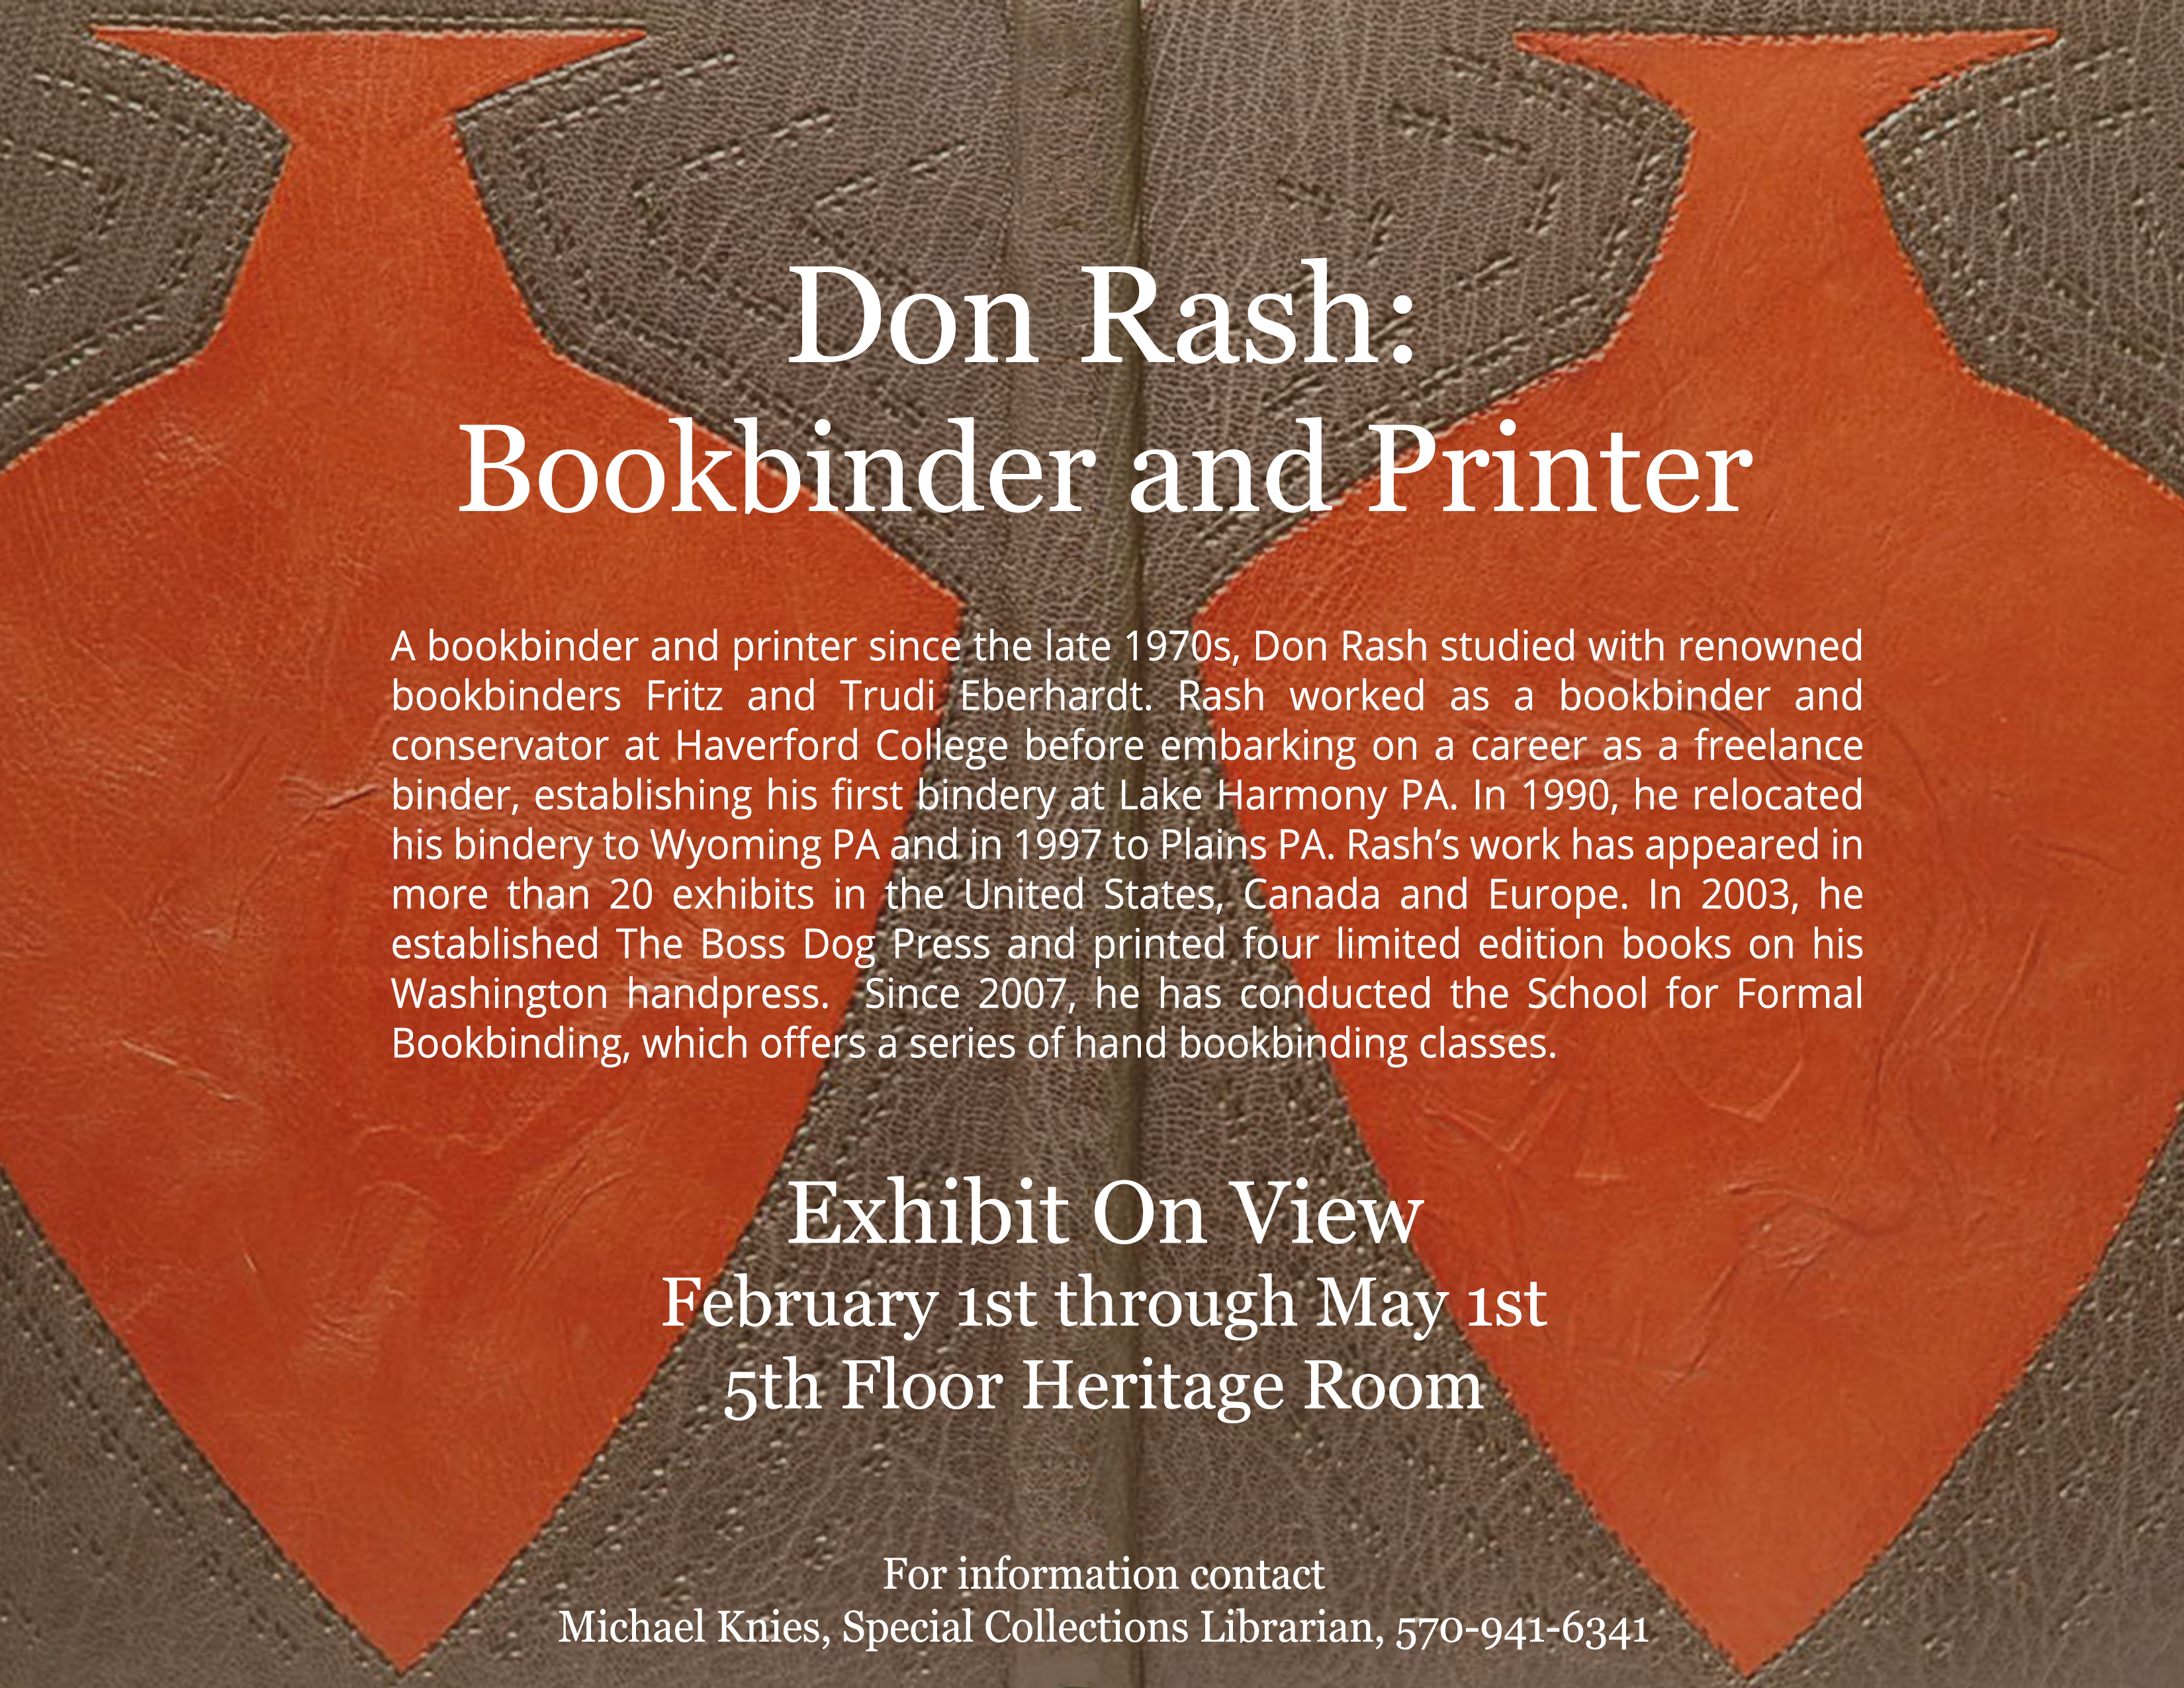 Library Exhibit - Don Rash - Bookbinder and Printer